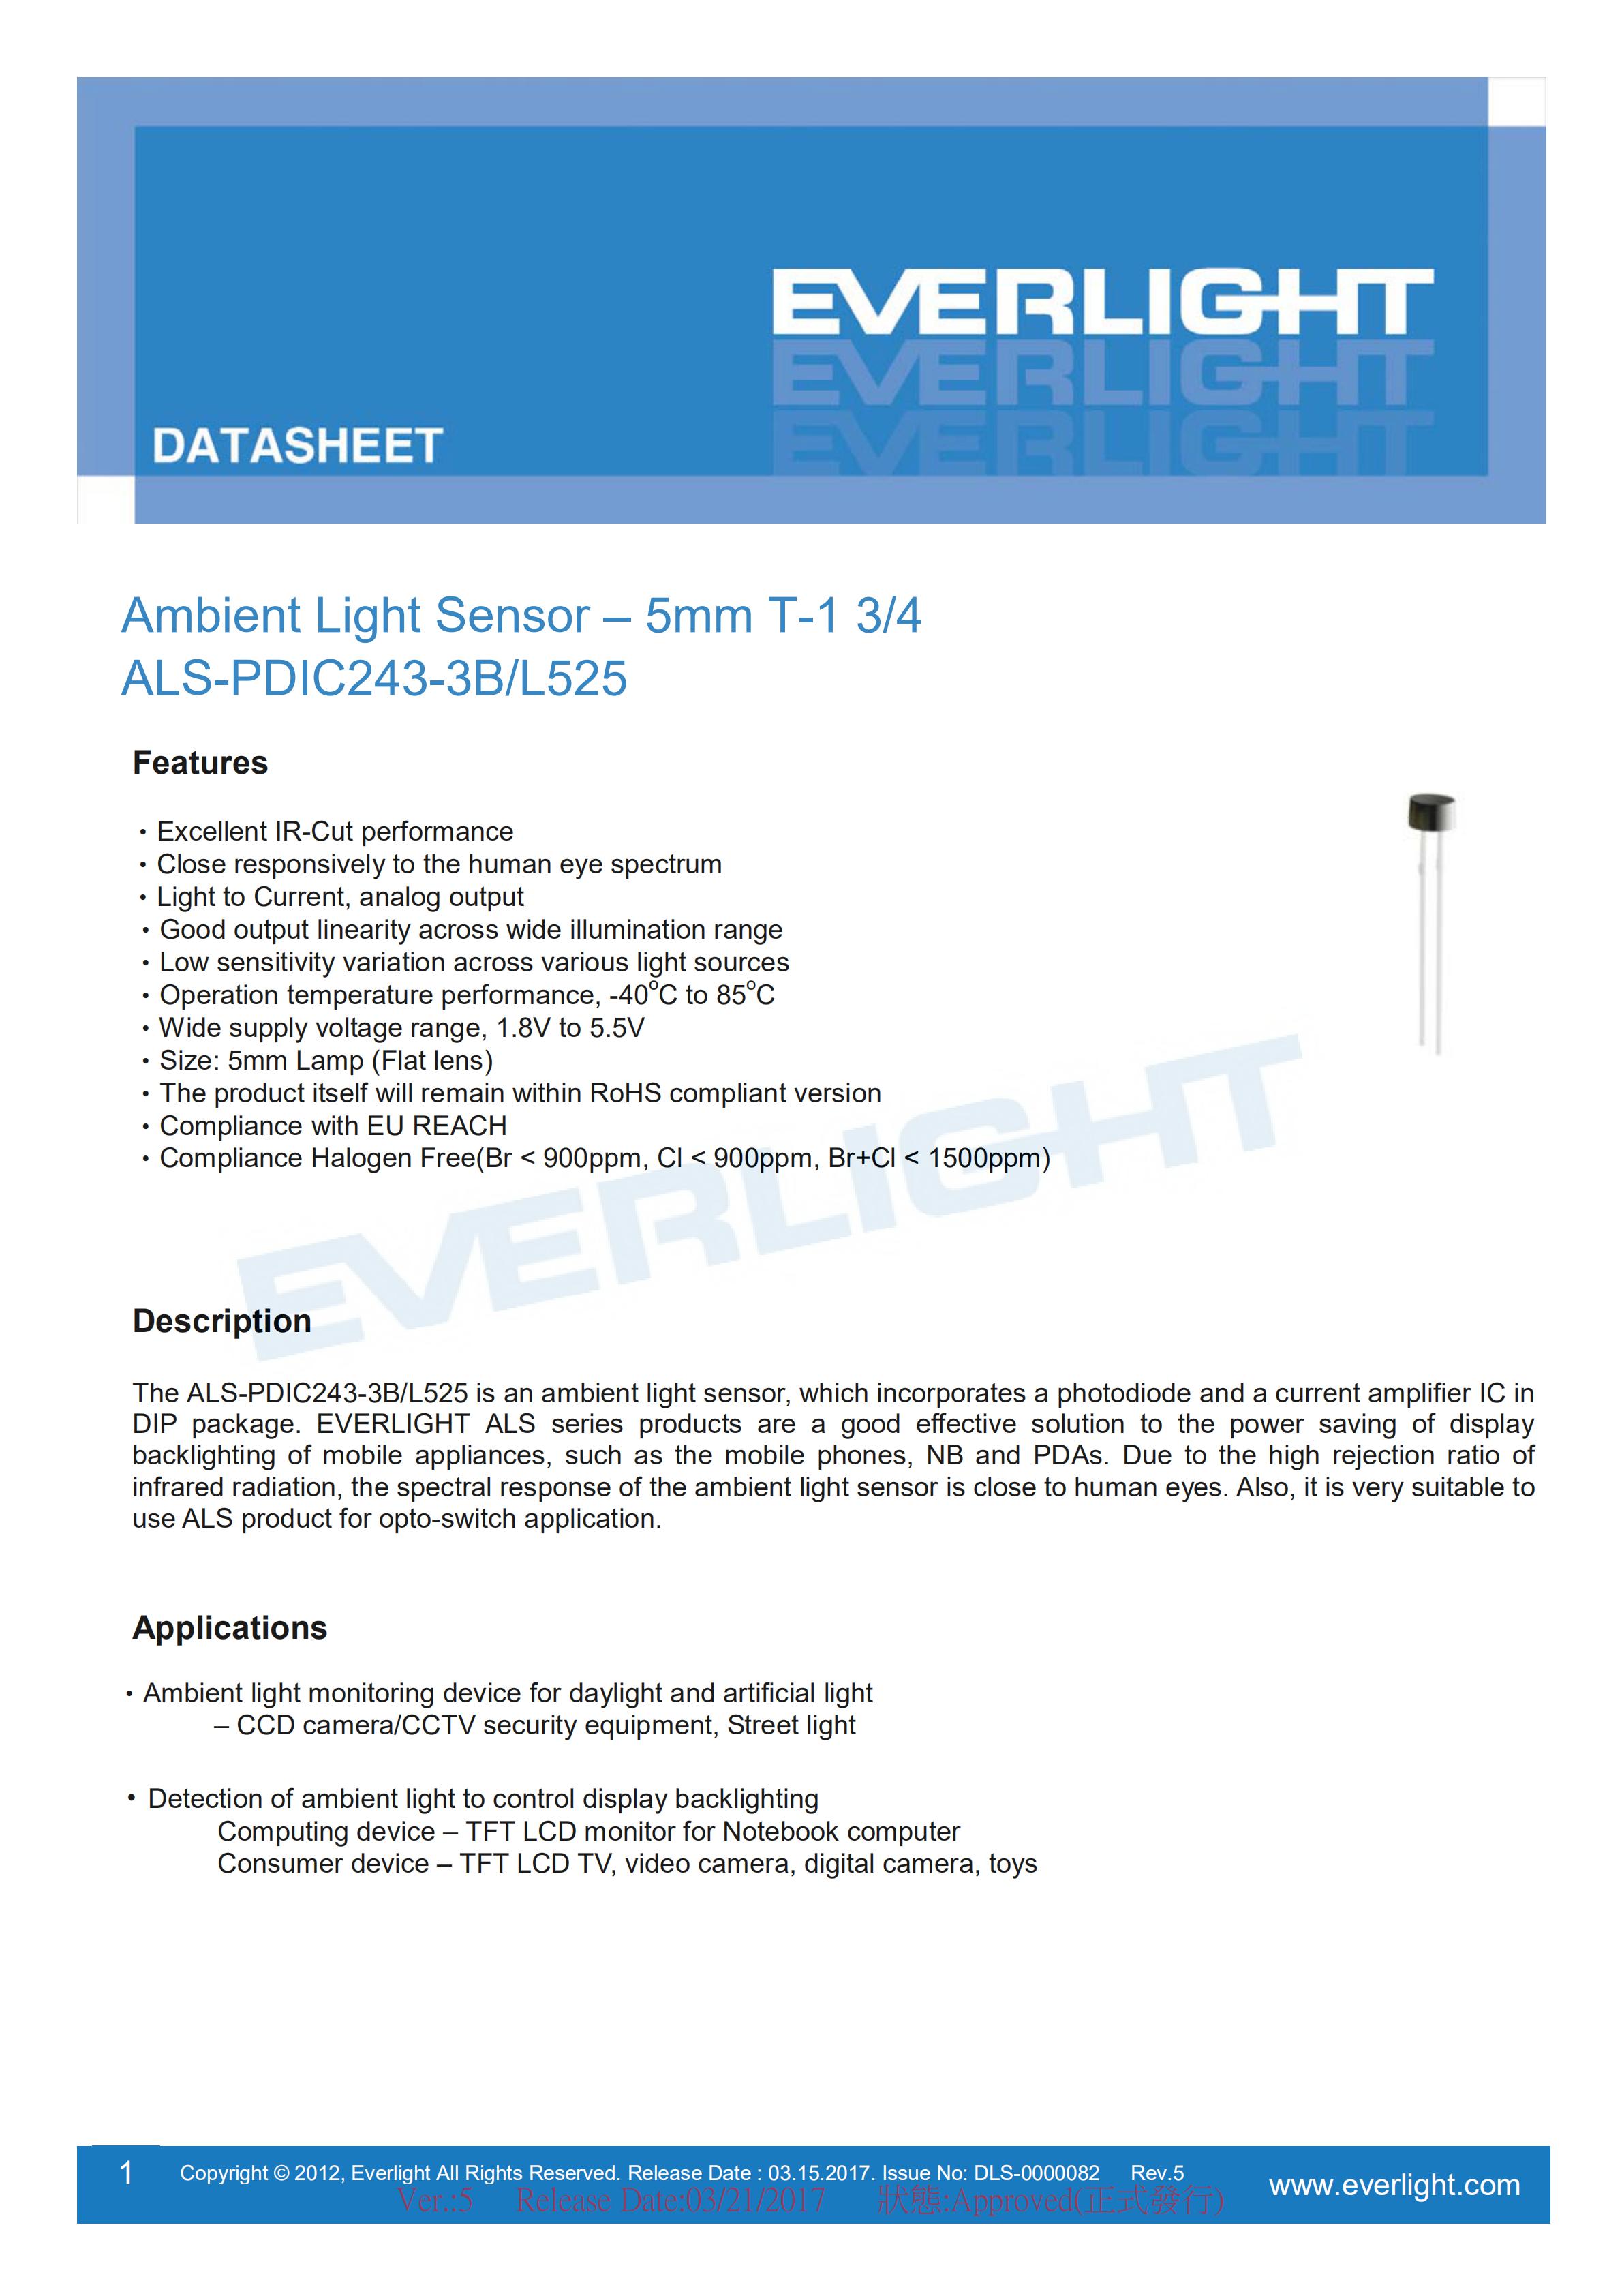 Everlight Ambient Light Sensor ALS-PDIC243-3B/L525 Datasheet